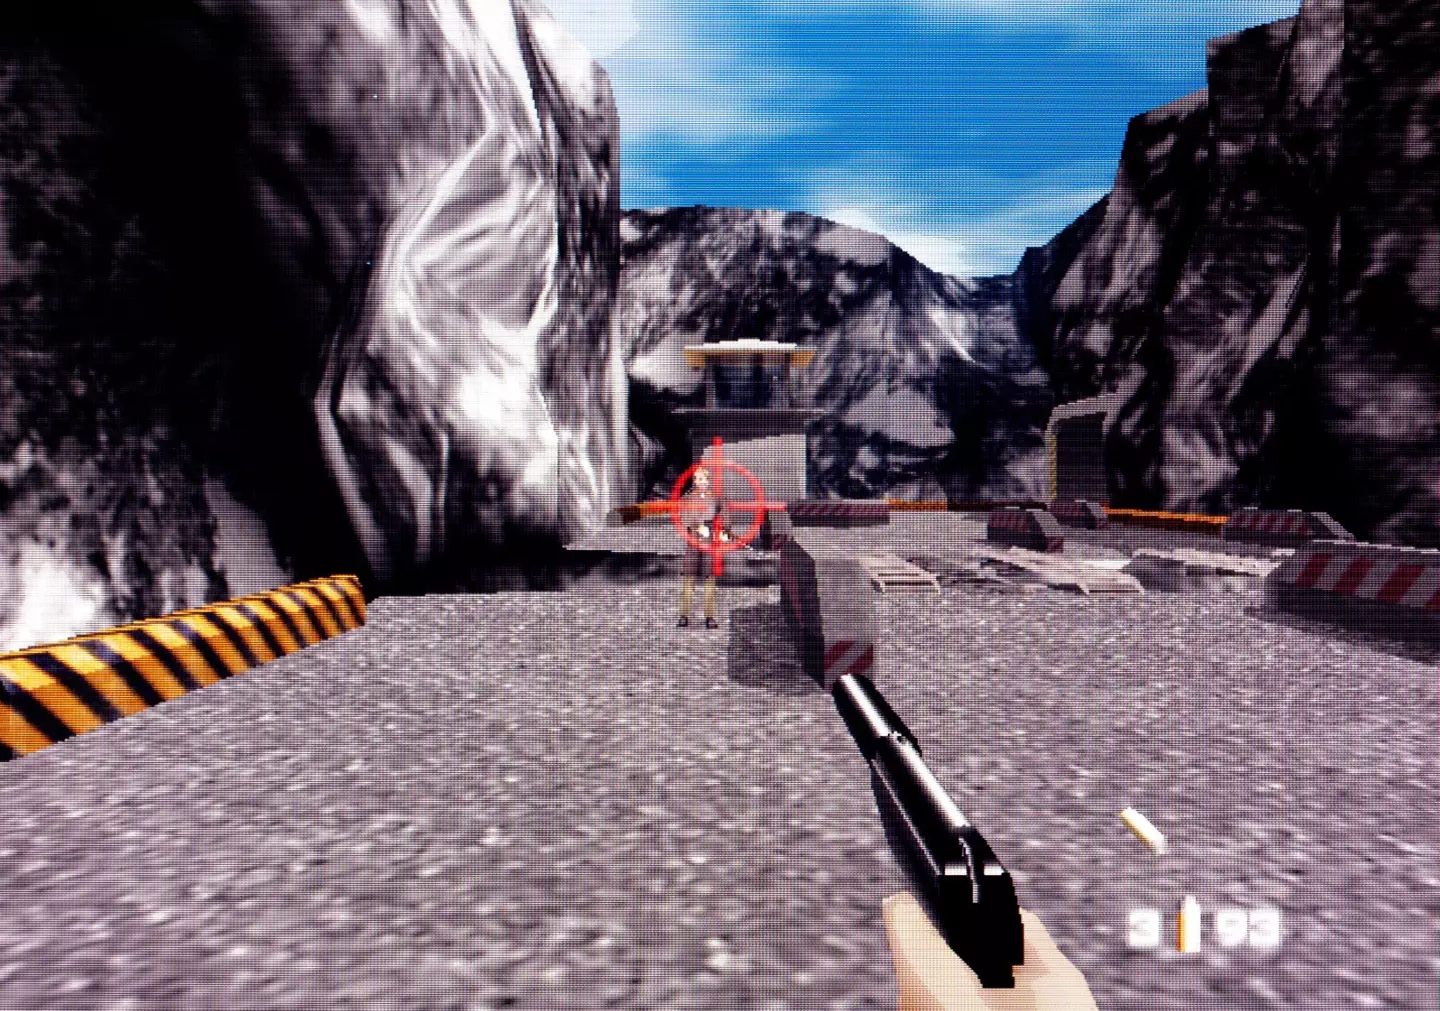 GoldenEye 007 first shot to fame as a Nintendo 64 game.